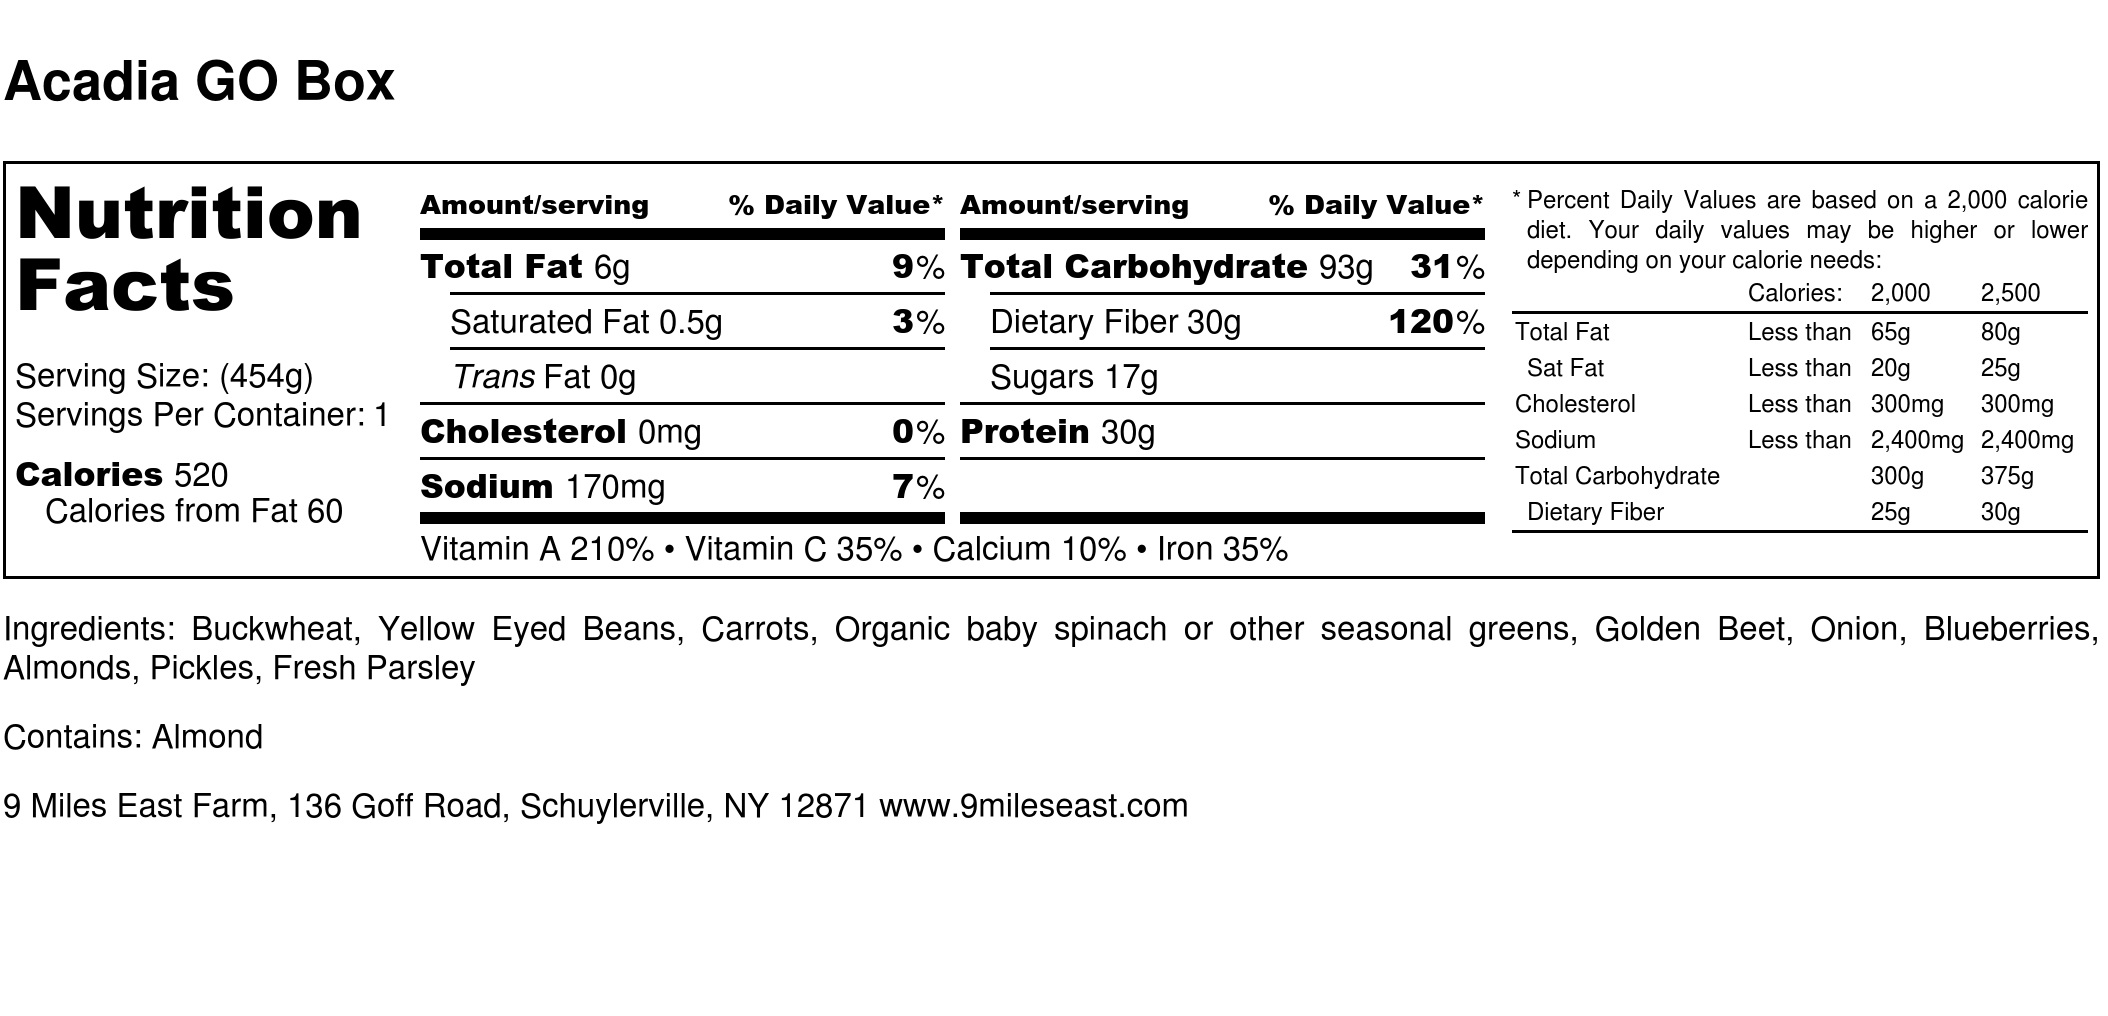 Acadia GO Box - Nutrition Label.jpg